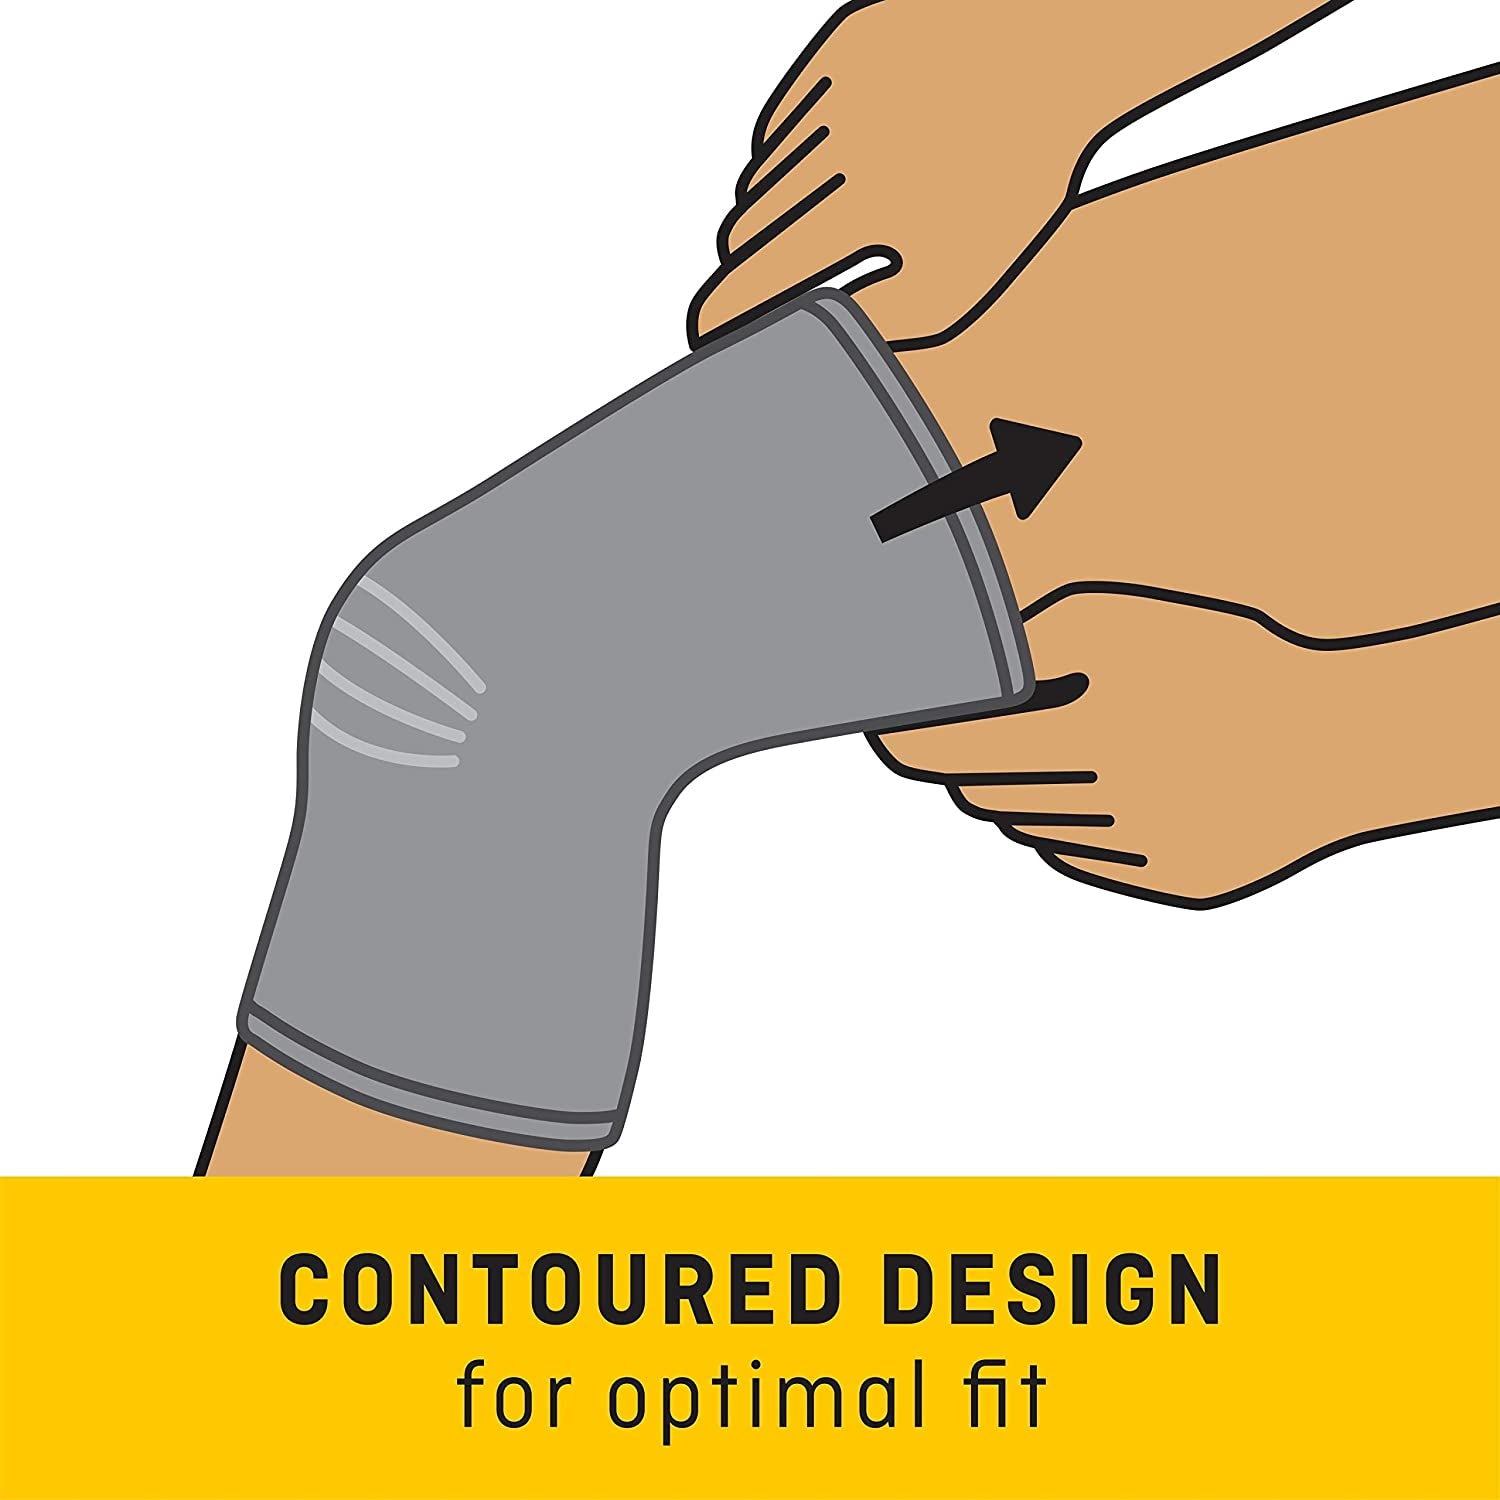 Futuro Comfort Lift Knee Support, Large